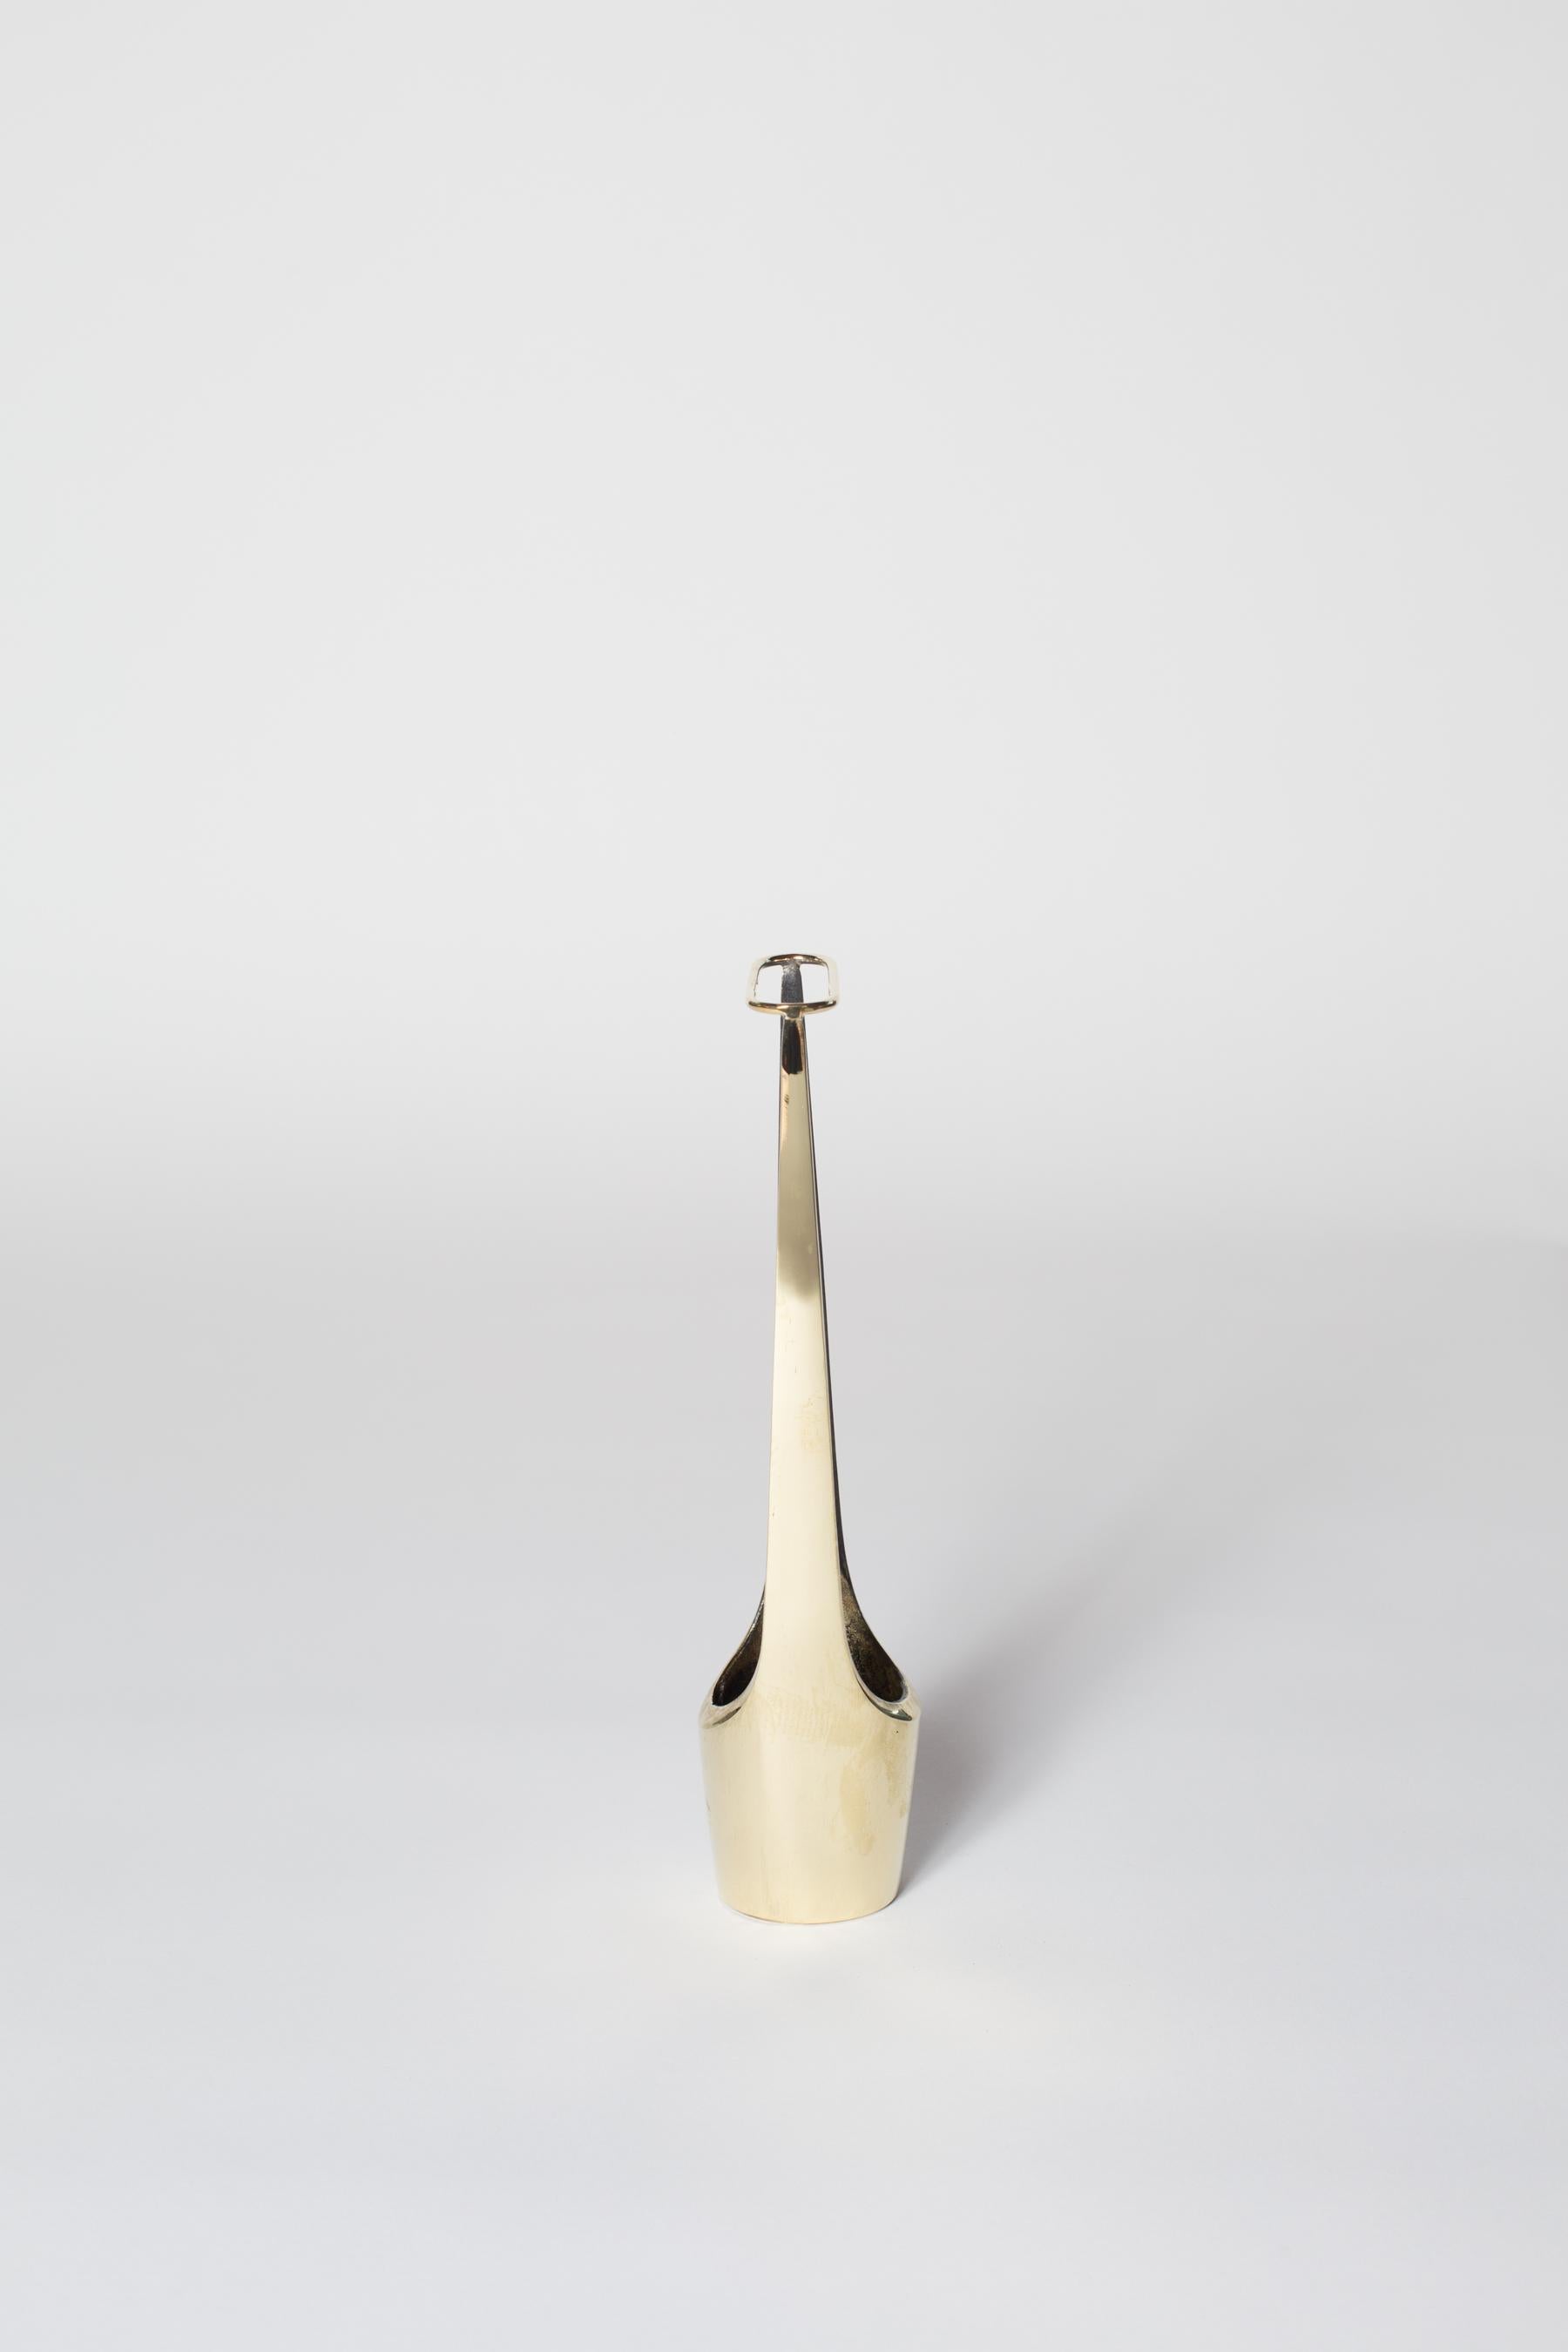 Carl Auböck Model #7228 Patinated Brass Vase For Sale 4